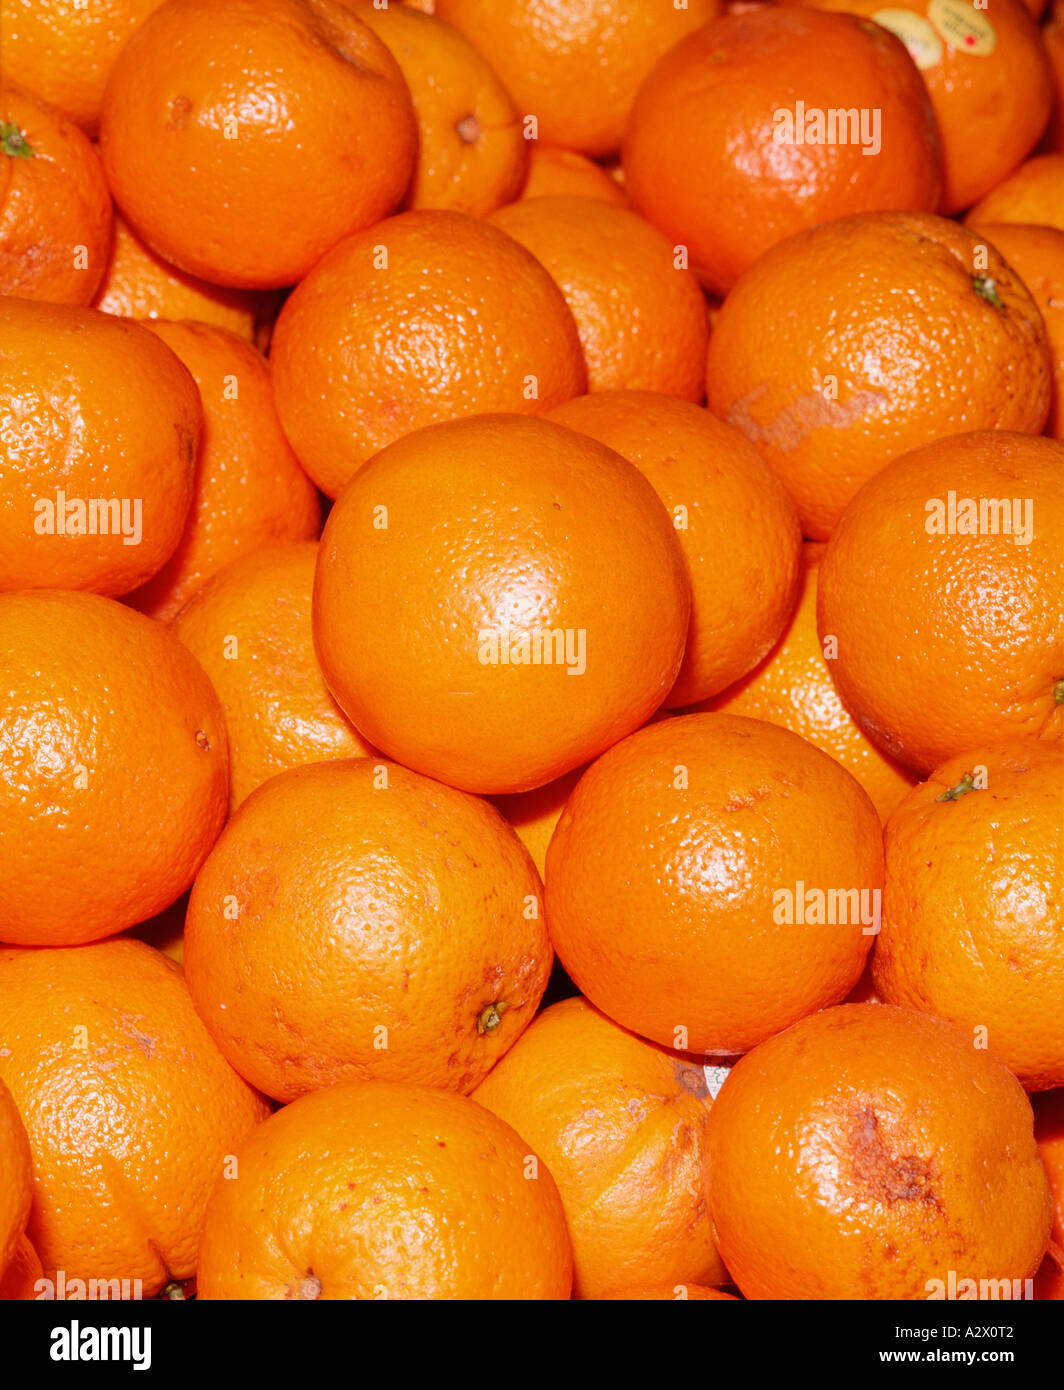 Food. Fruit. Still life of Oranges. Stock Photo